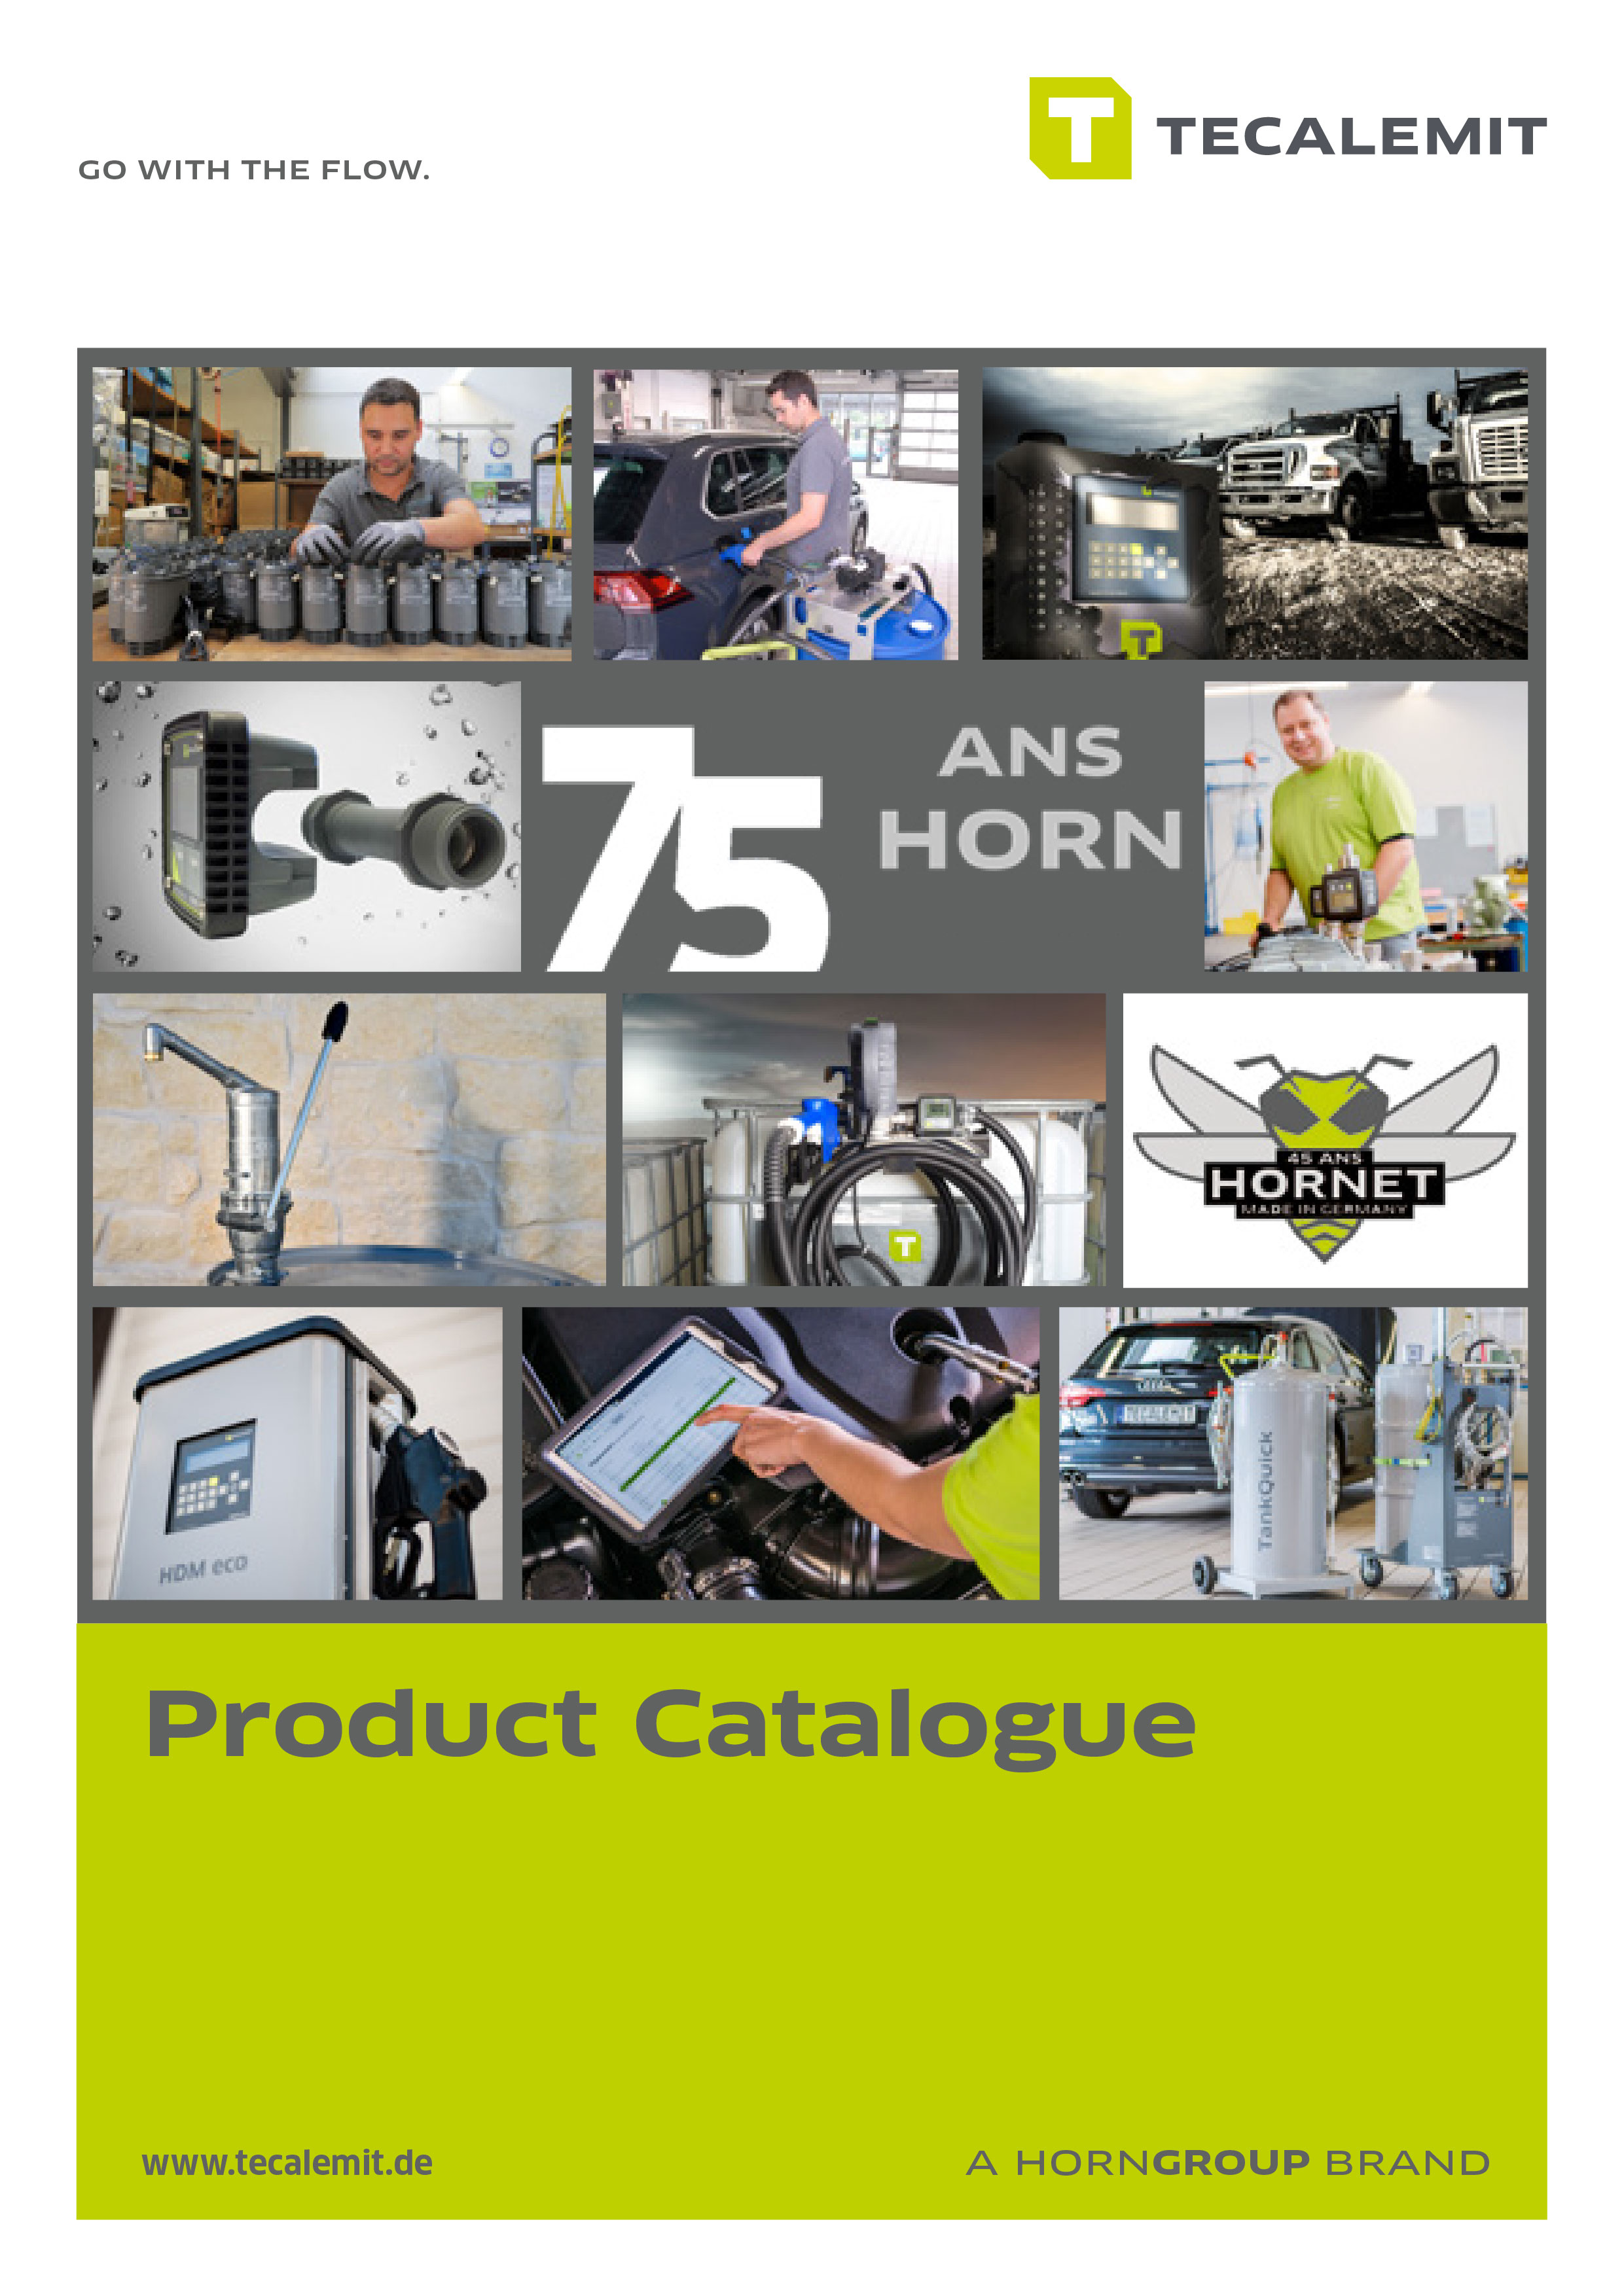 PCL Tecalemit 英文手册 Product Catalogue